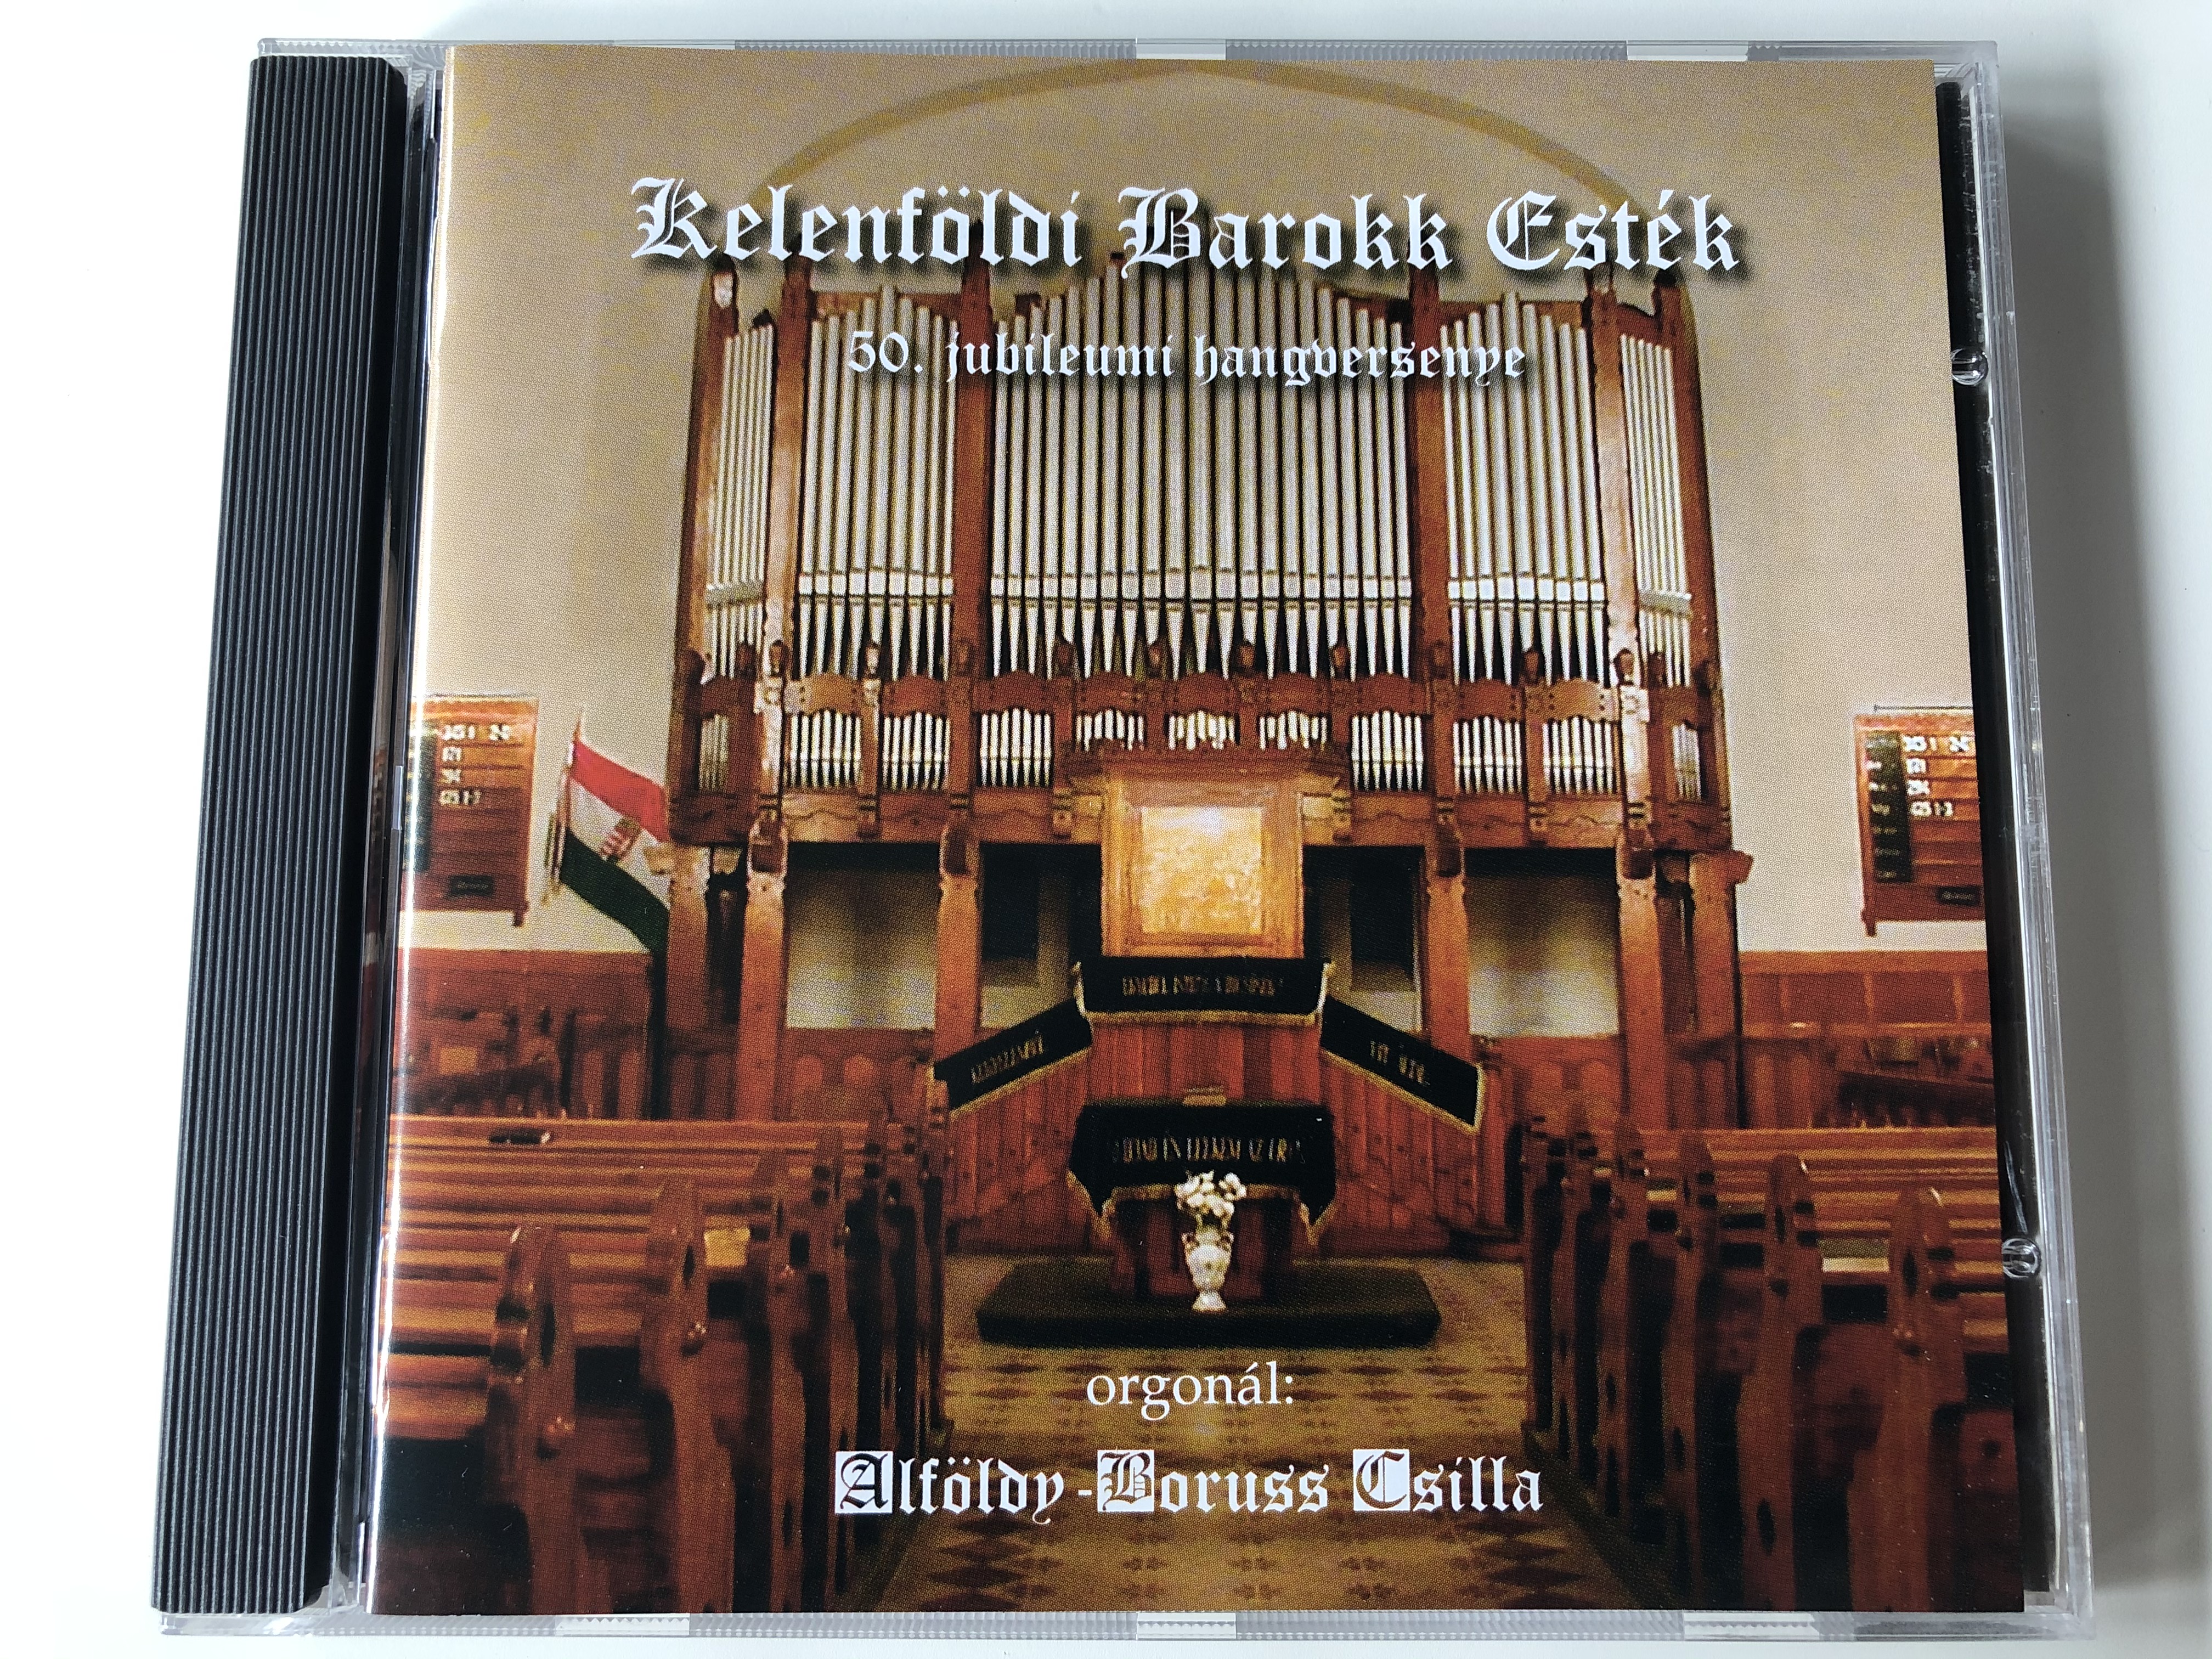 kelenfoldi-barokk-estek-50.-jubileumi-hangversenye-orgonal-alfoldy-boruss-csilla-audio-cd-2004-ab-2005-1-.jpg